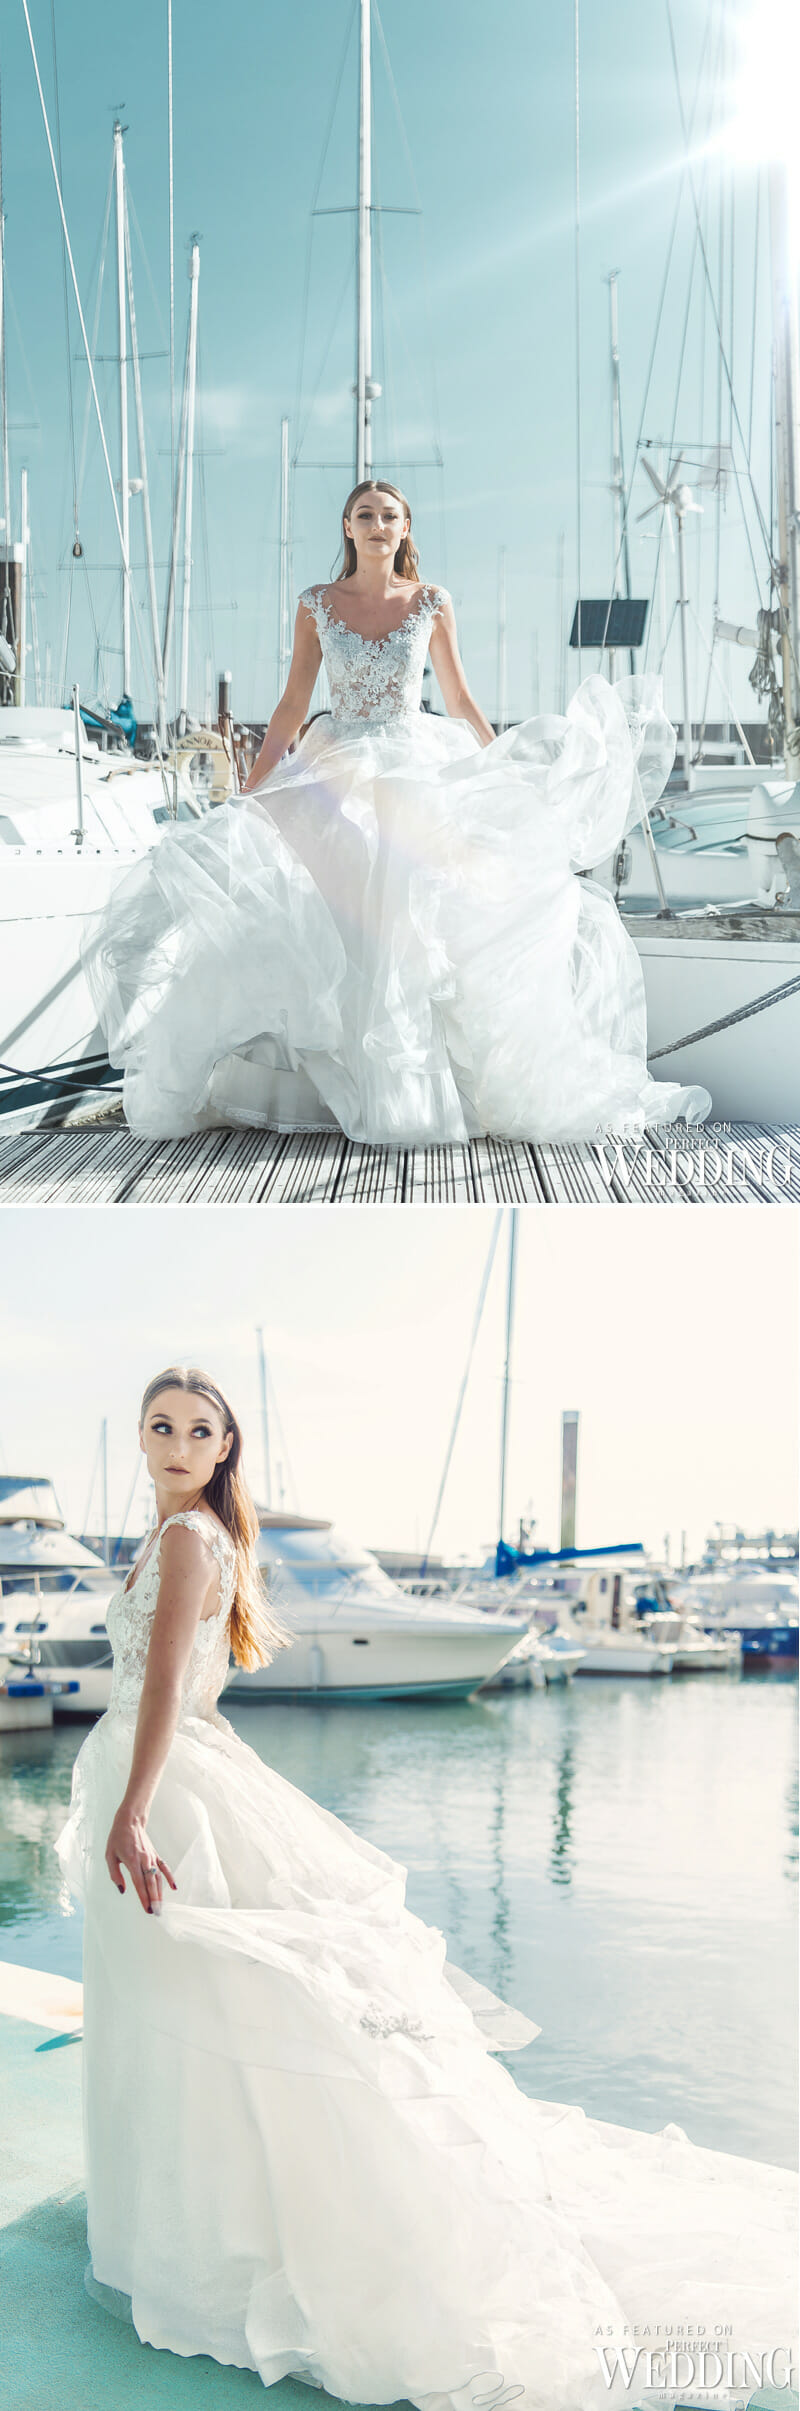 Summer Wedding Gowns, Wedding by the Sea, Bridal style Shoot, Fashion Shoot, UK Wedding Vendors, Perfect Wedding Magazine, Perfect Wedding Blog, Bridal Fashion, Ian Stuart,